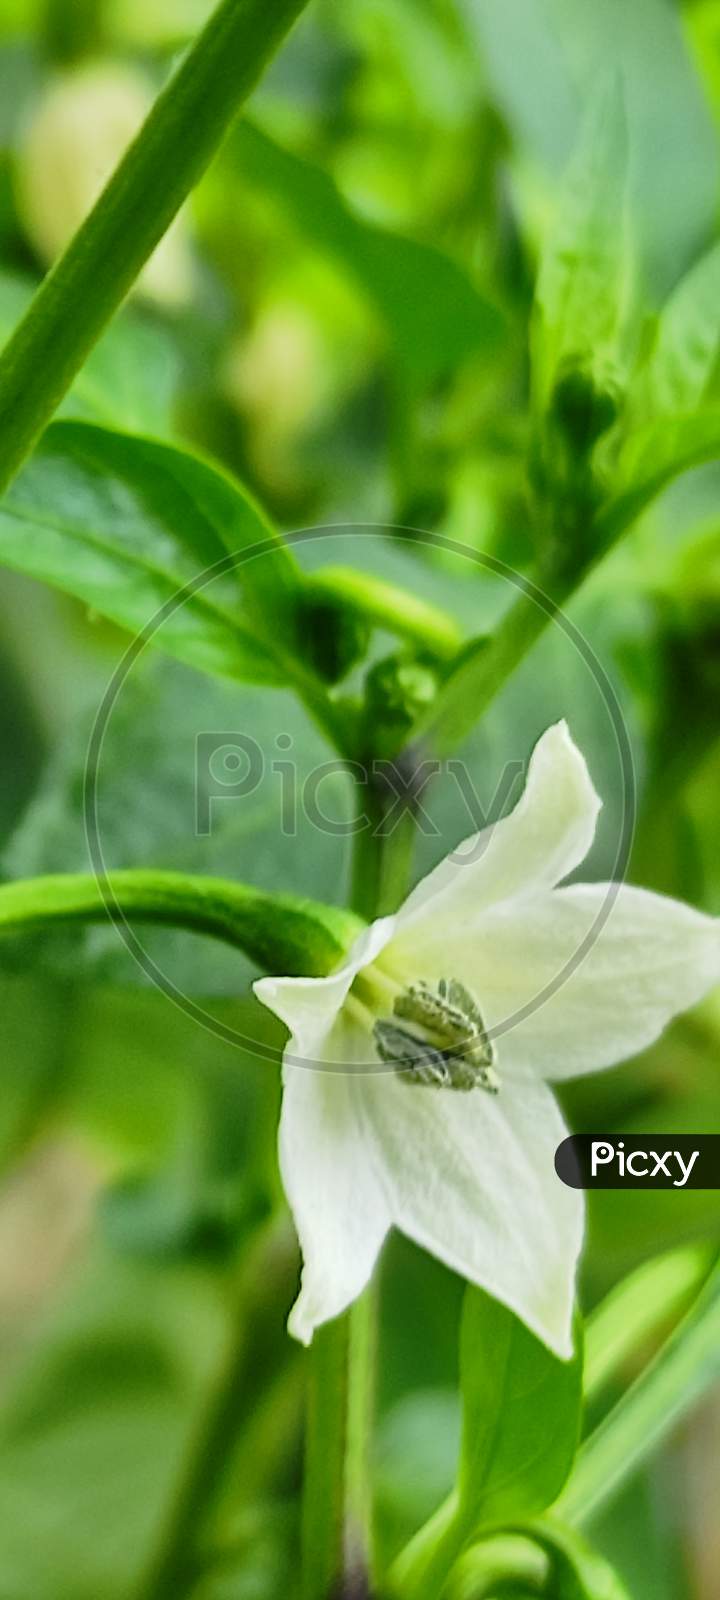 Pepper flowers